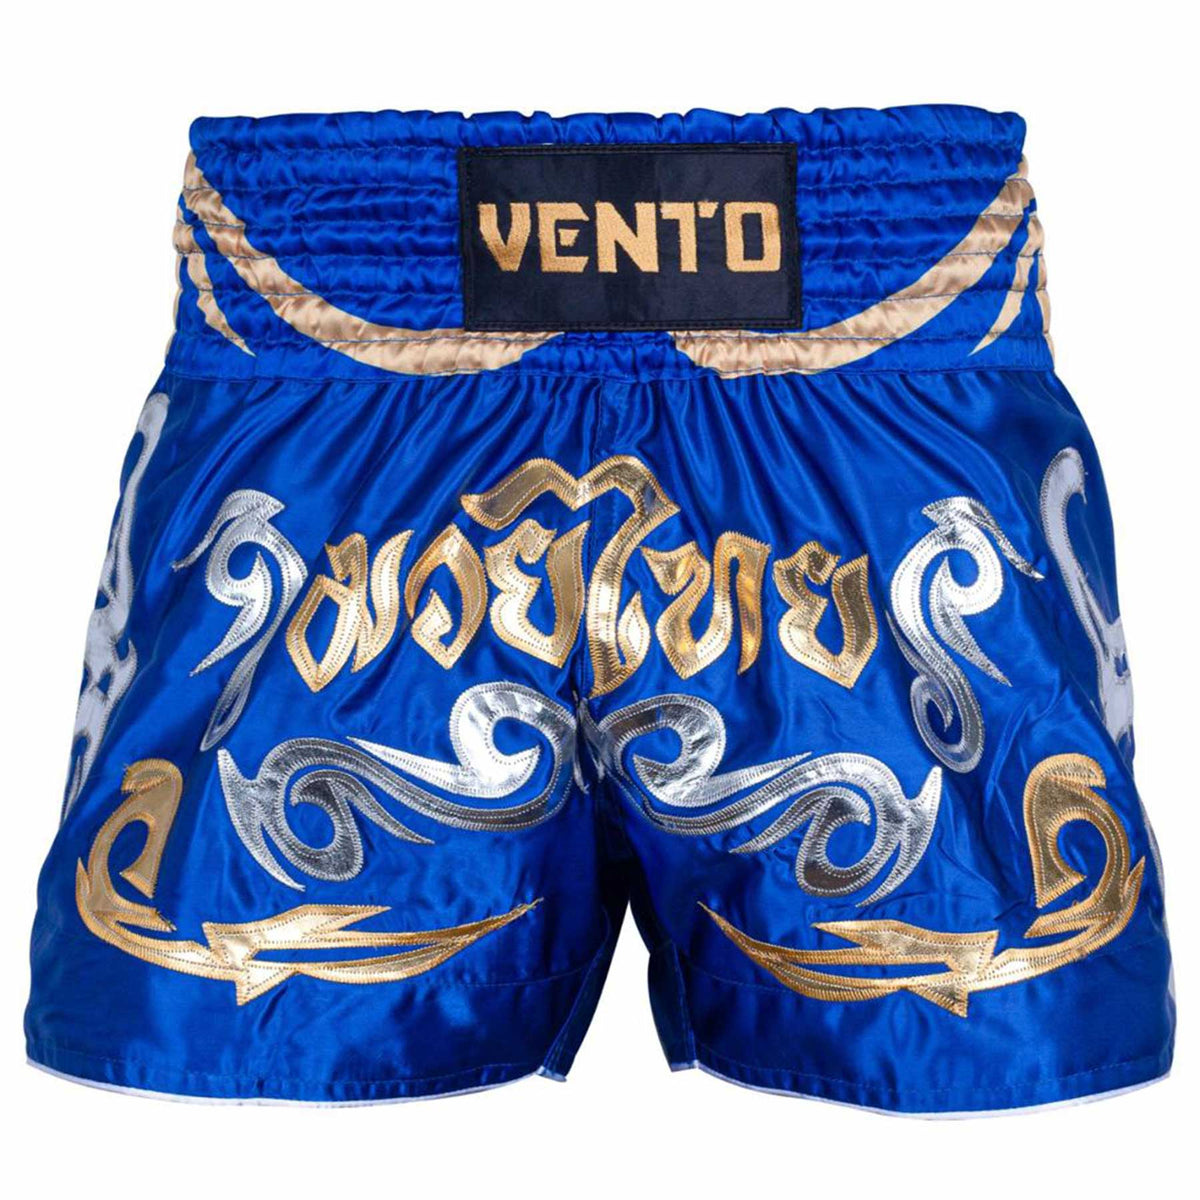 Vento Laceration Kickboxing Shorts